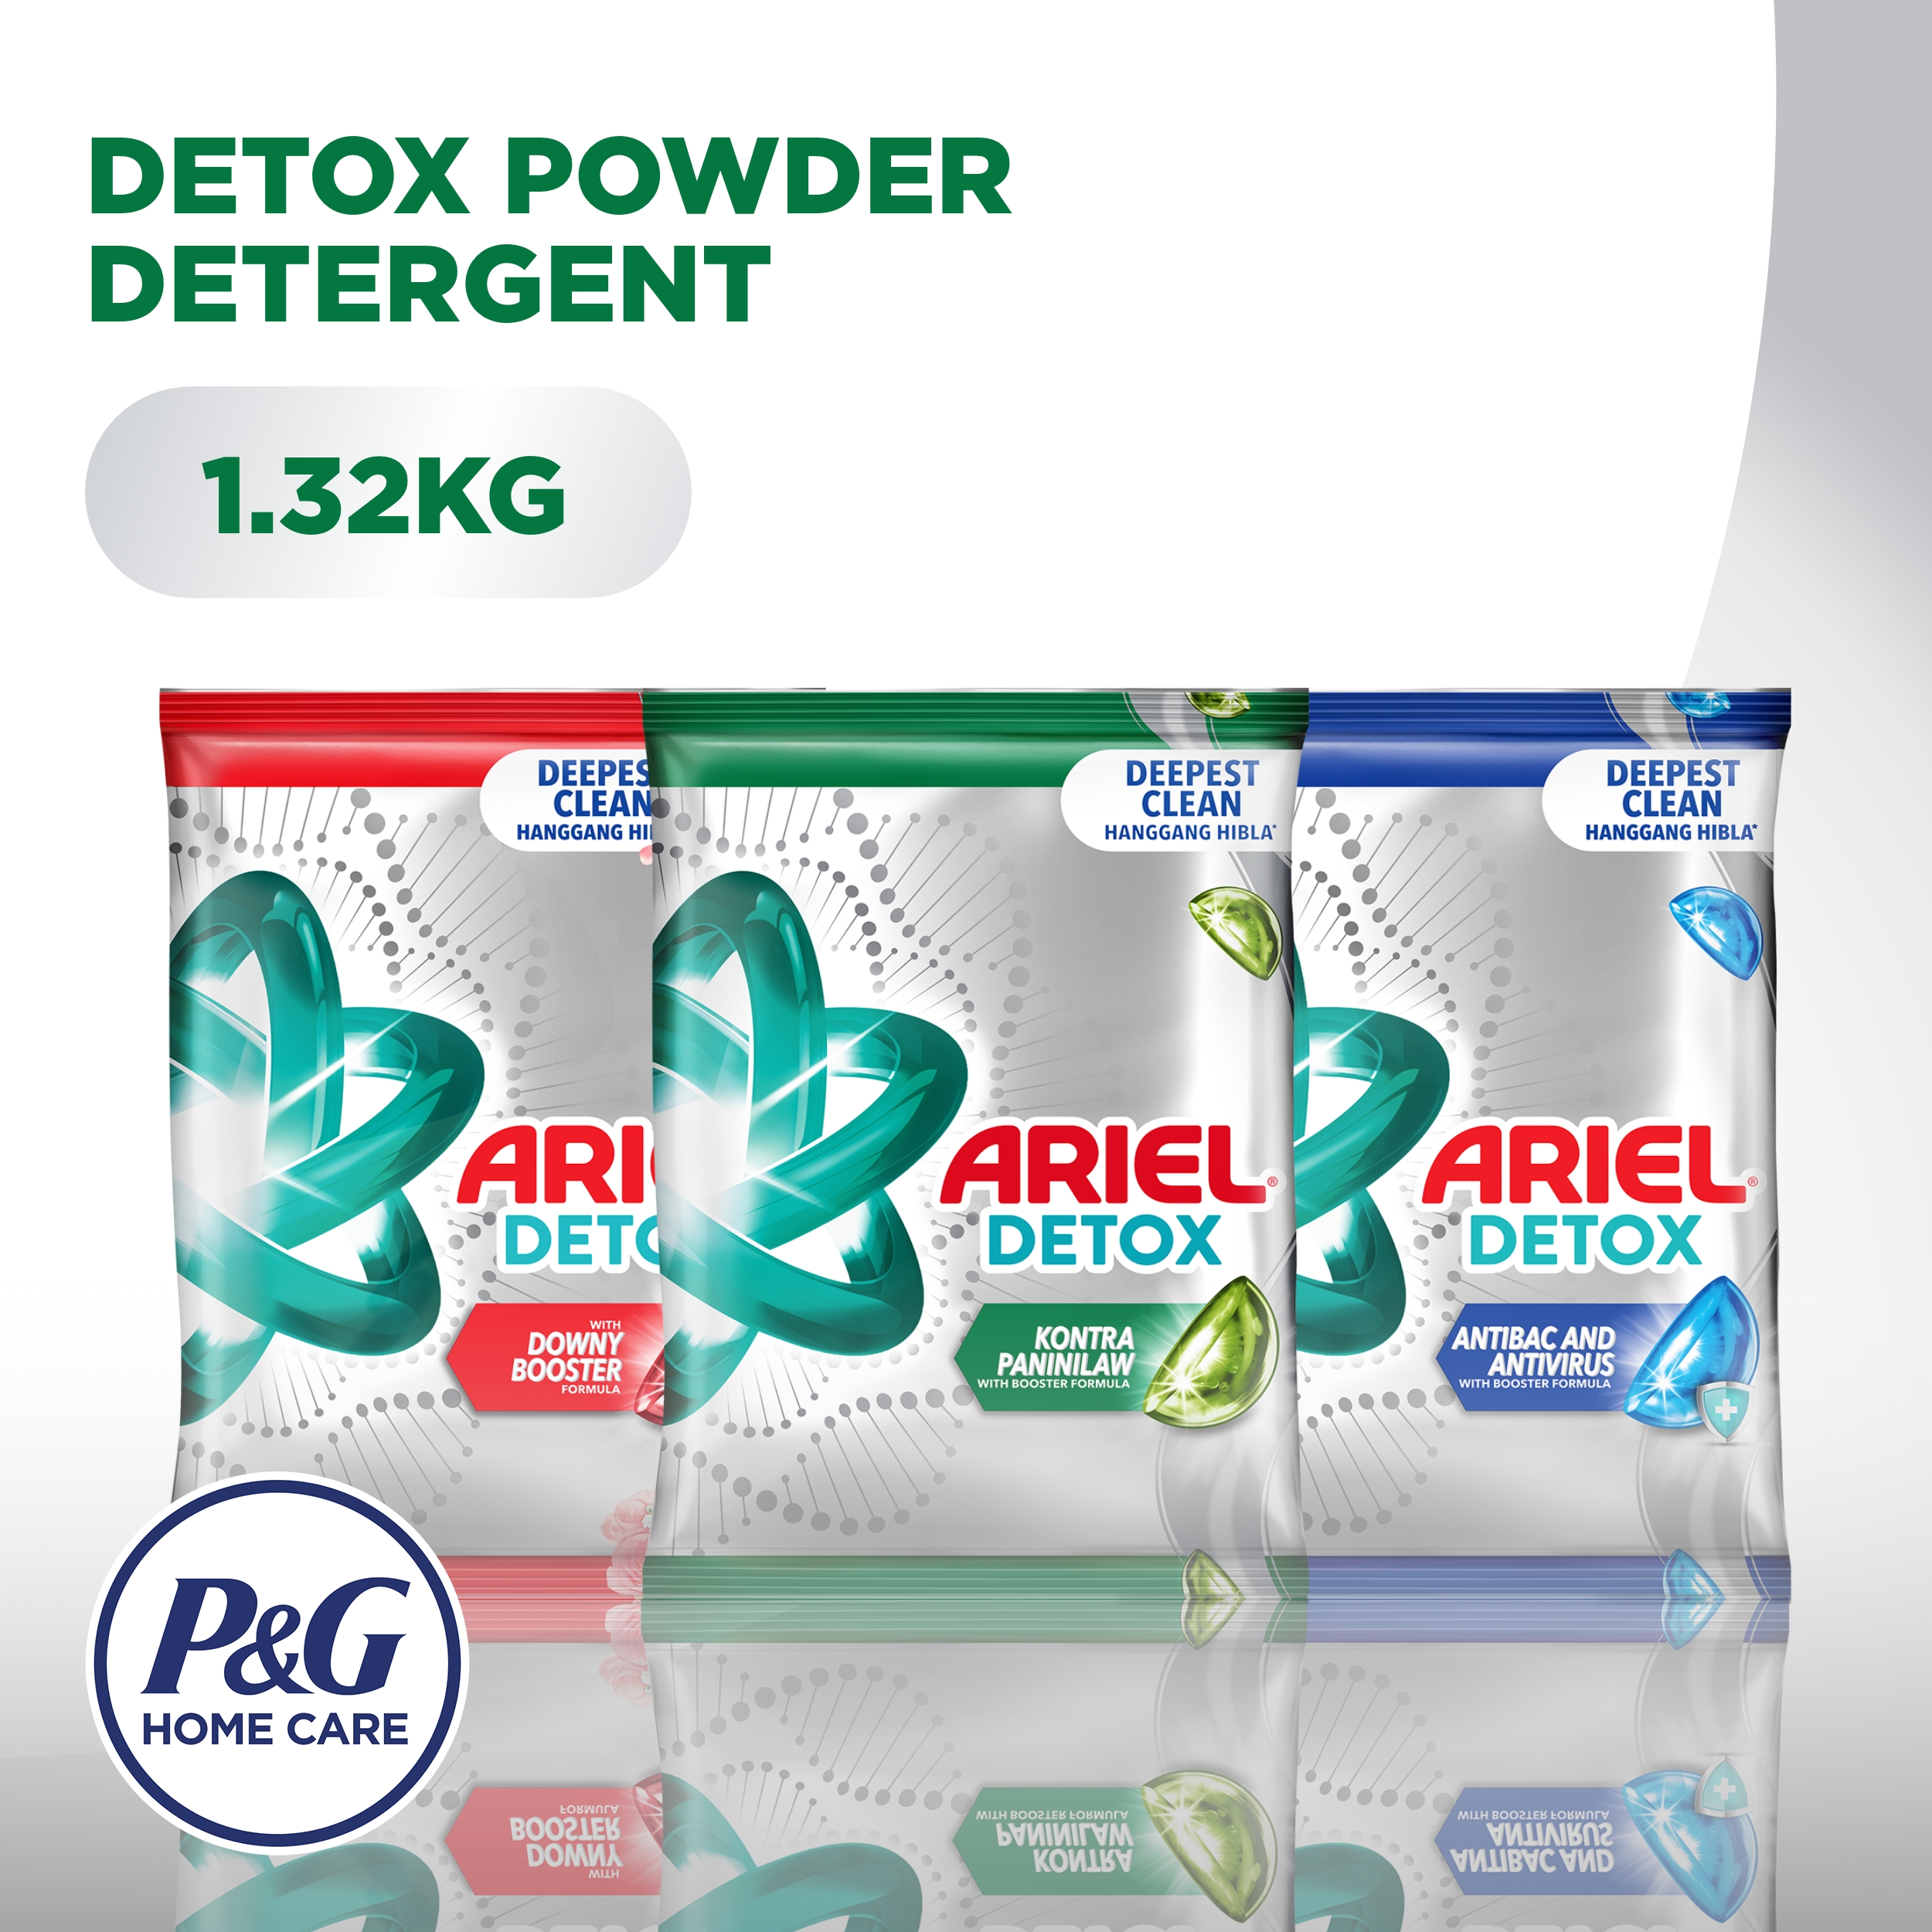 Ariel Detox Power Booster Detergent - 1.32KG Pouch